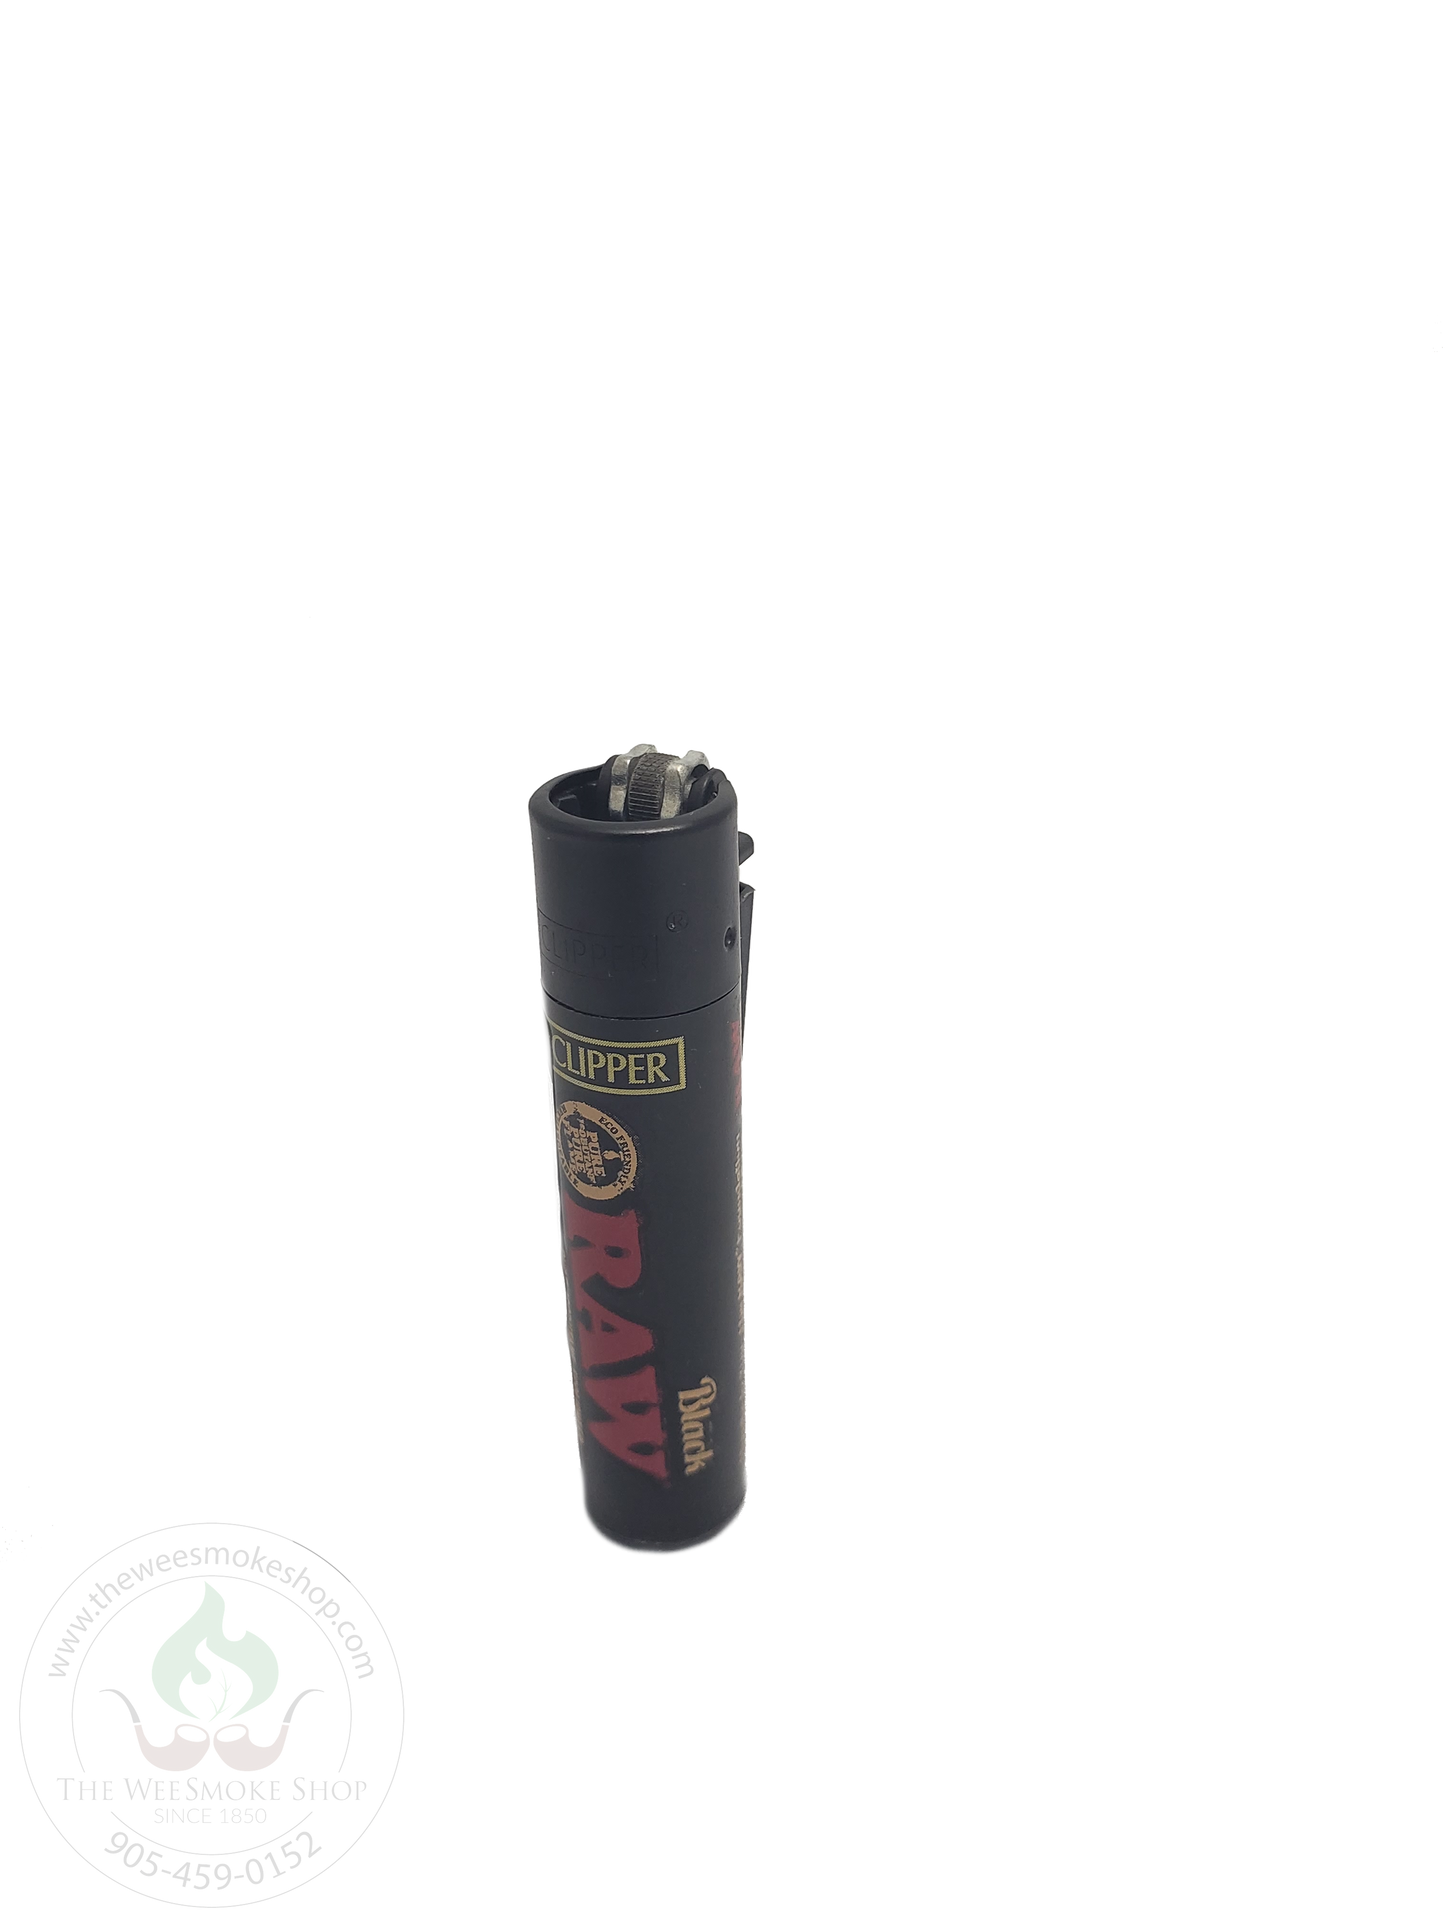 Raw Black Clipper Lighter-lighter-The Wee Smoke Shop